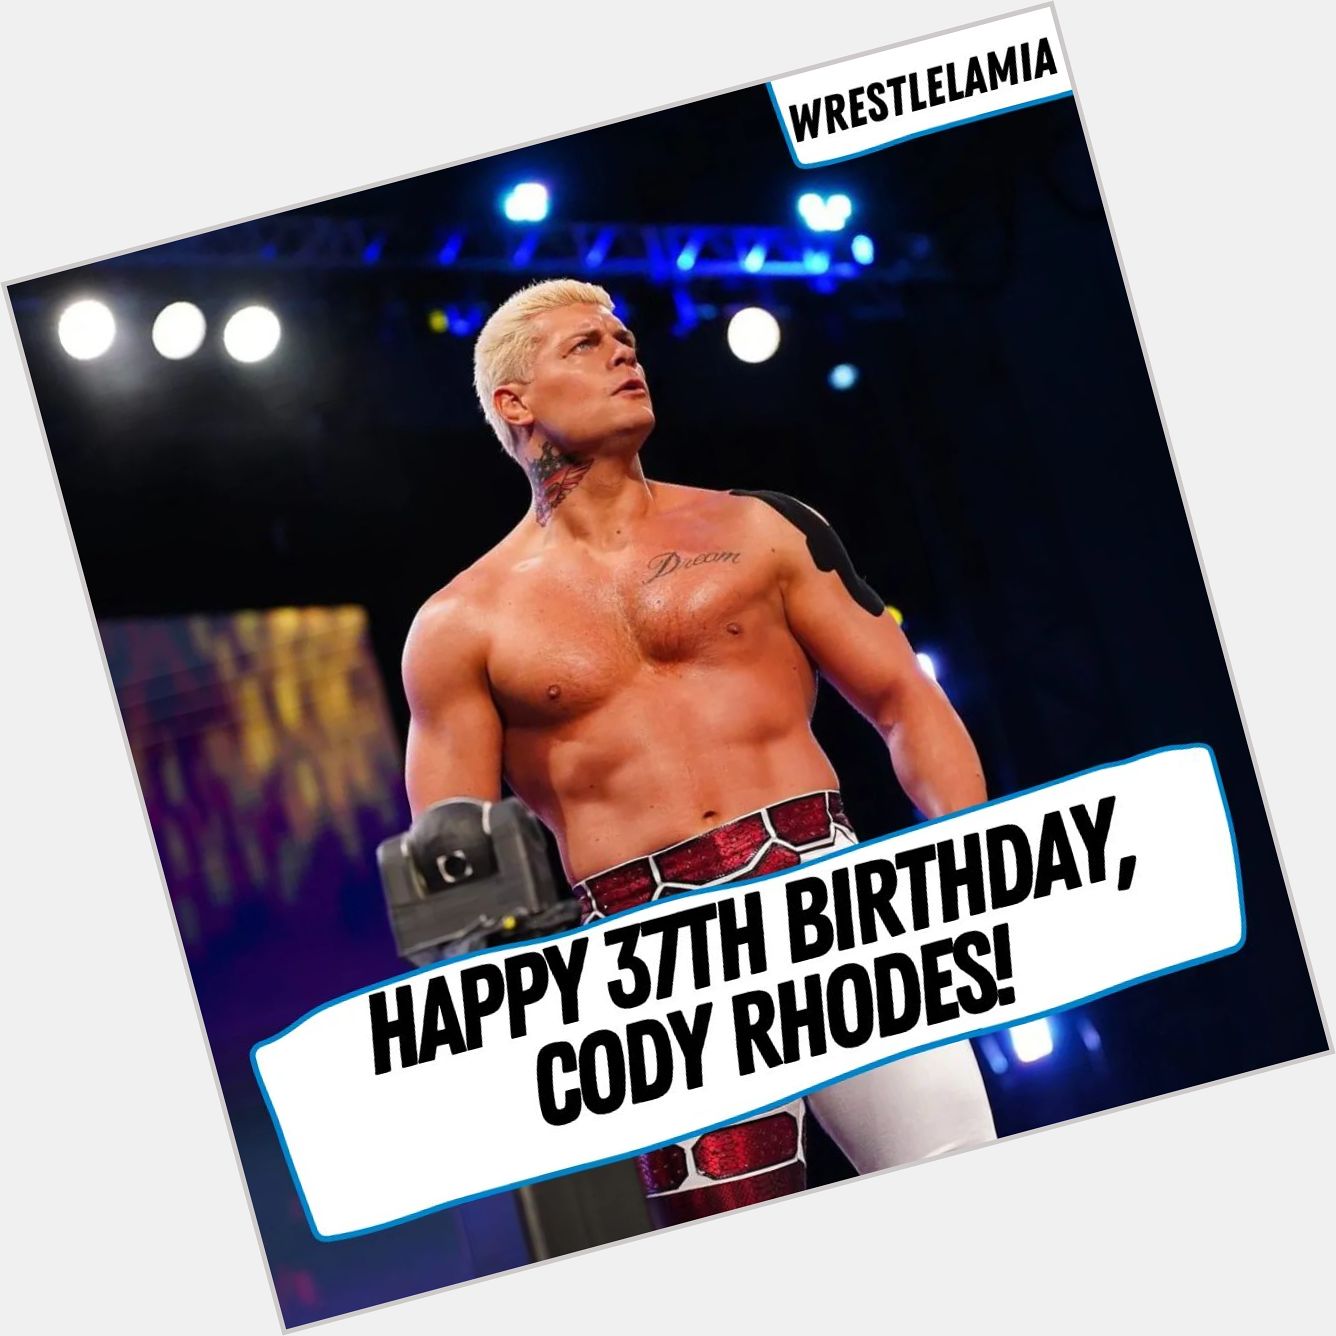 Happy 37th Birthday to current WWE superstar, Cody Rhodes. 